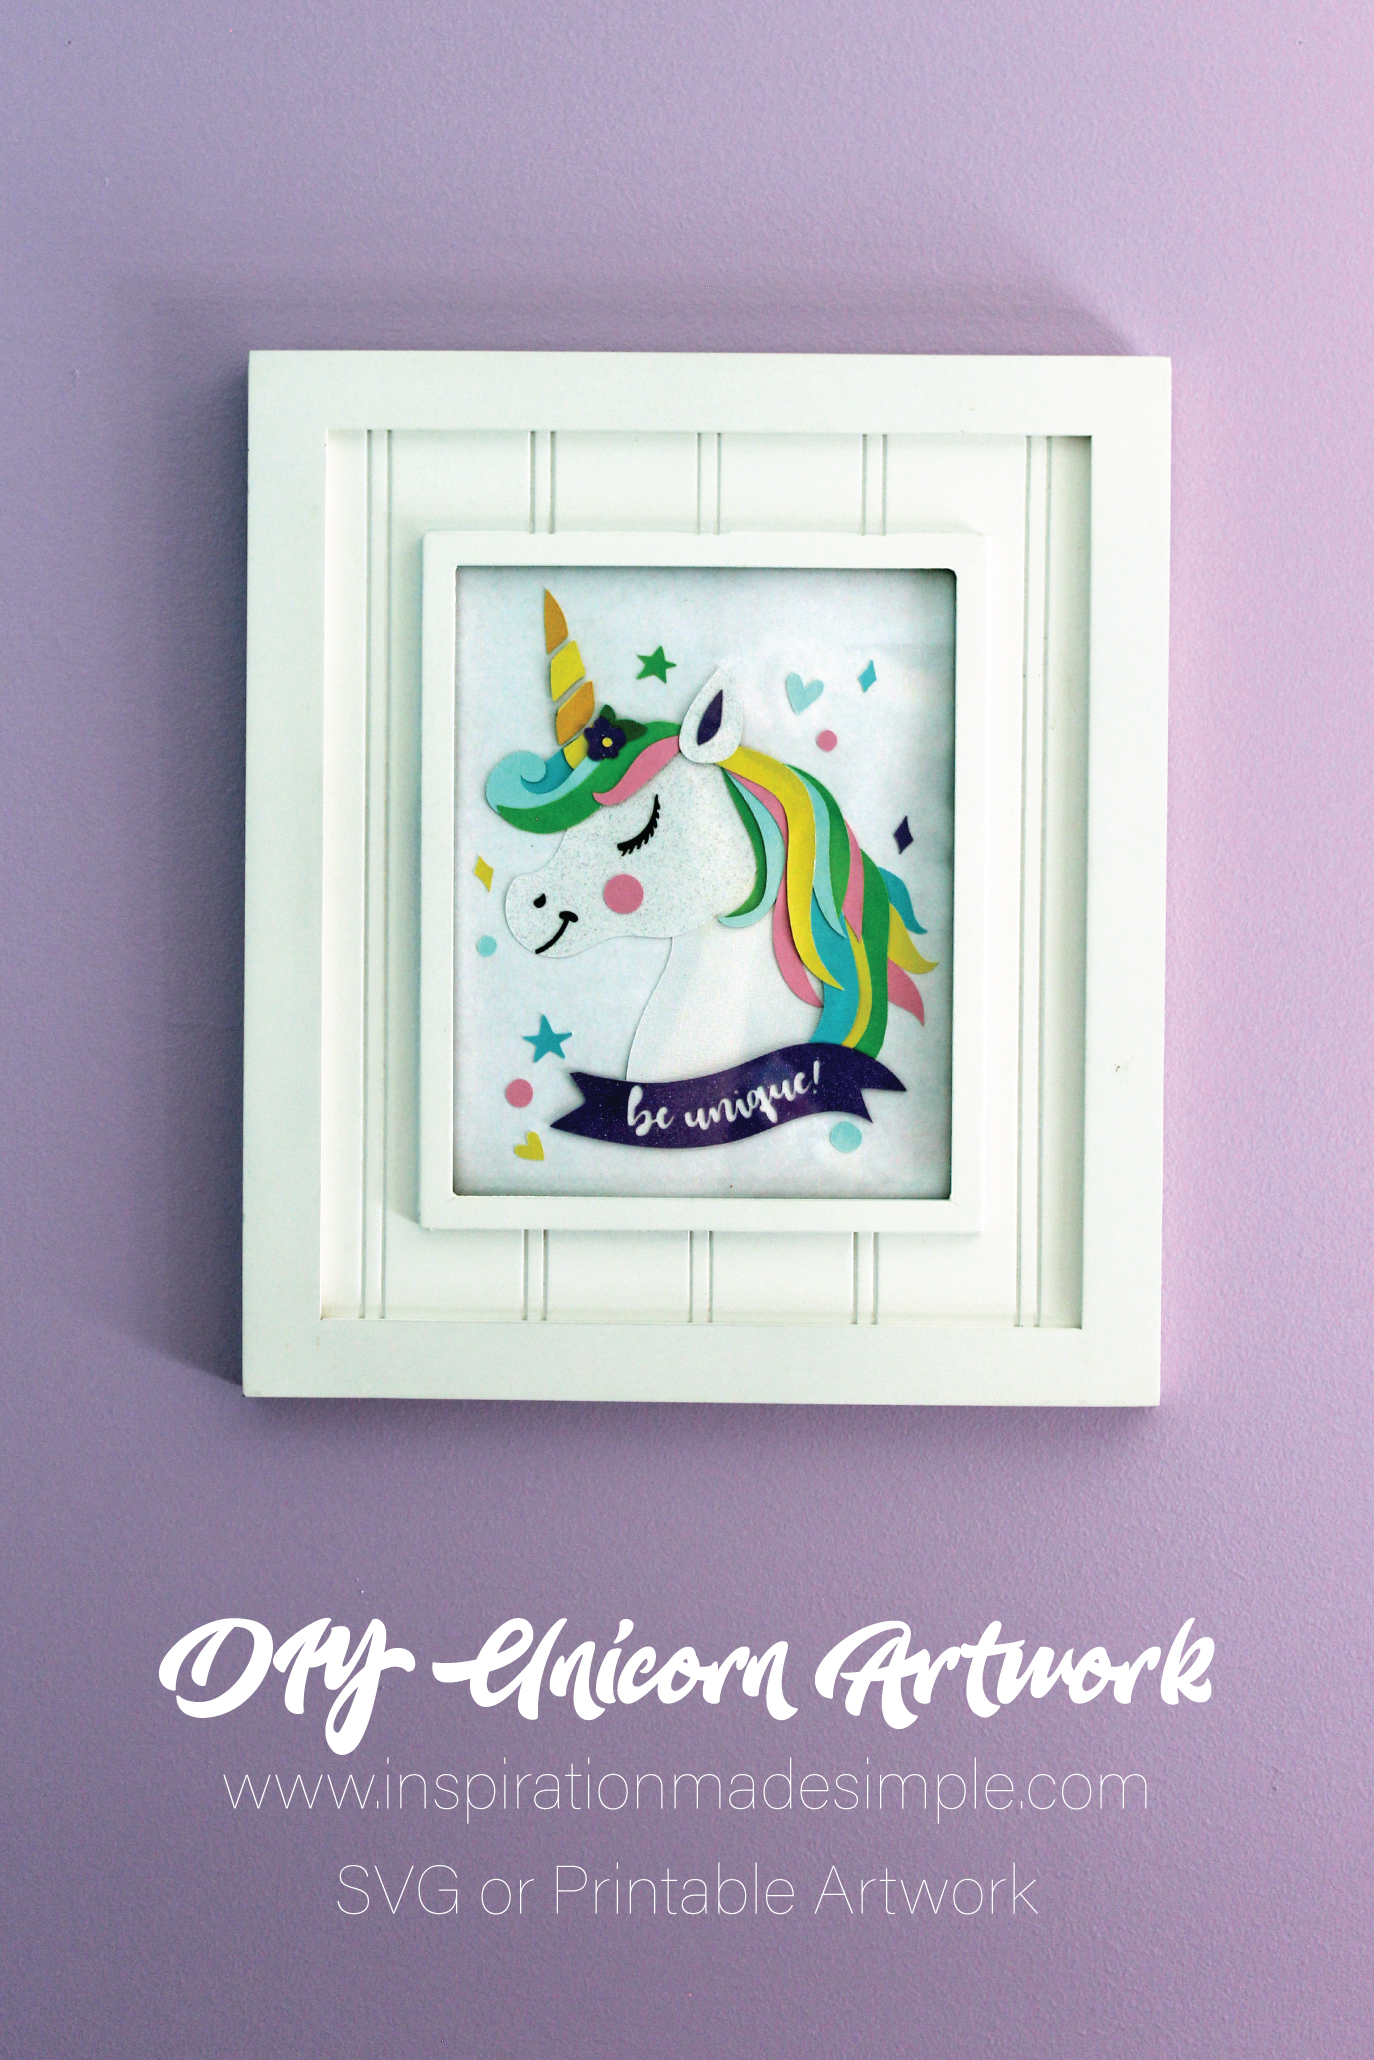 DIY Paper Pieced Unicorn Artwork - SVG or printable file